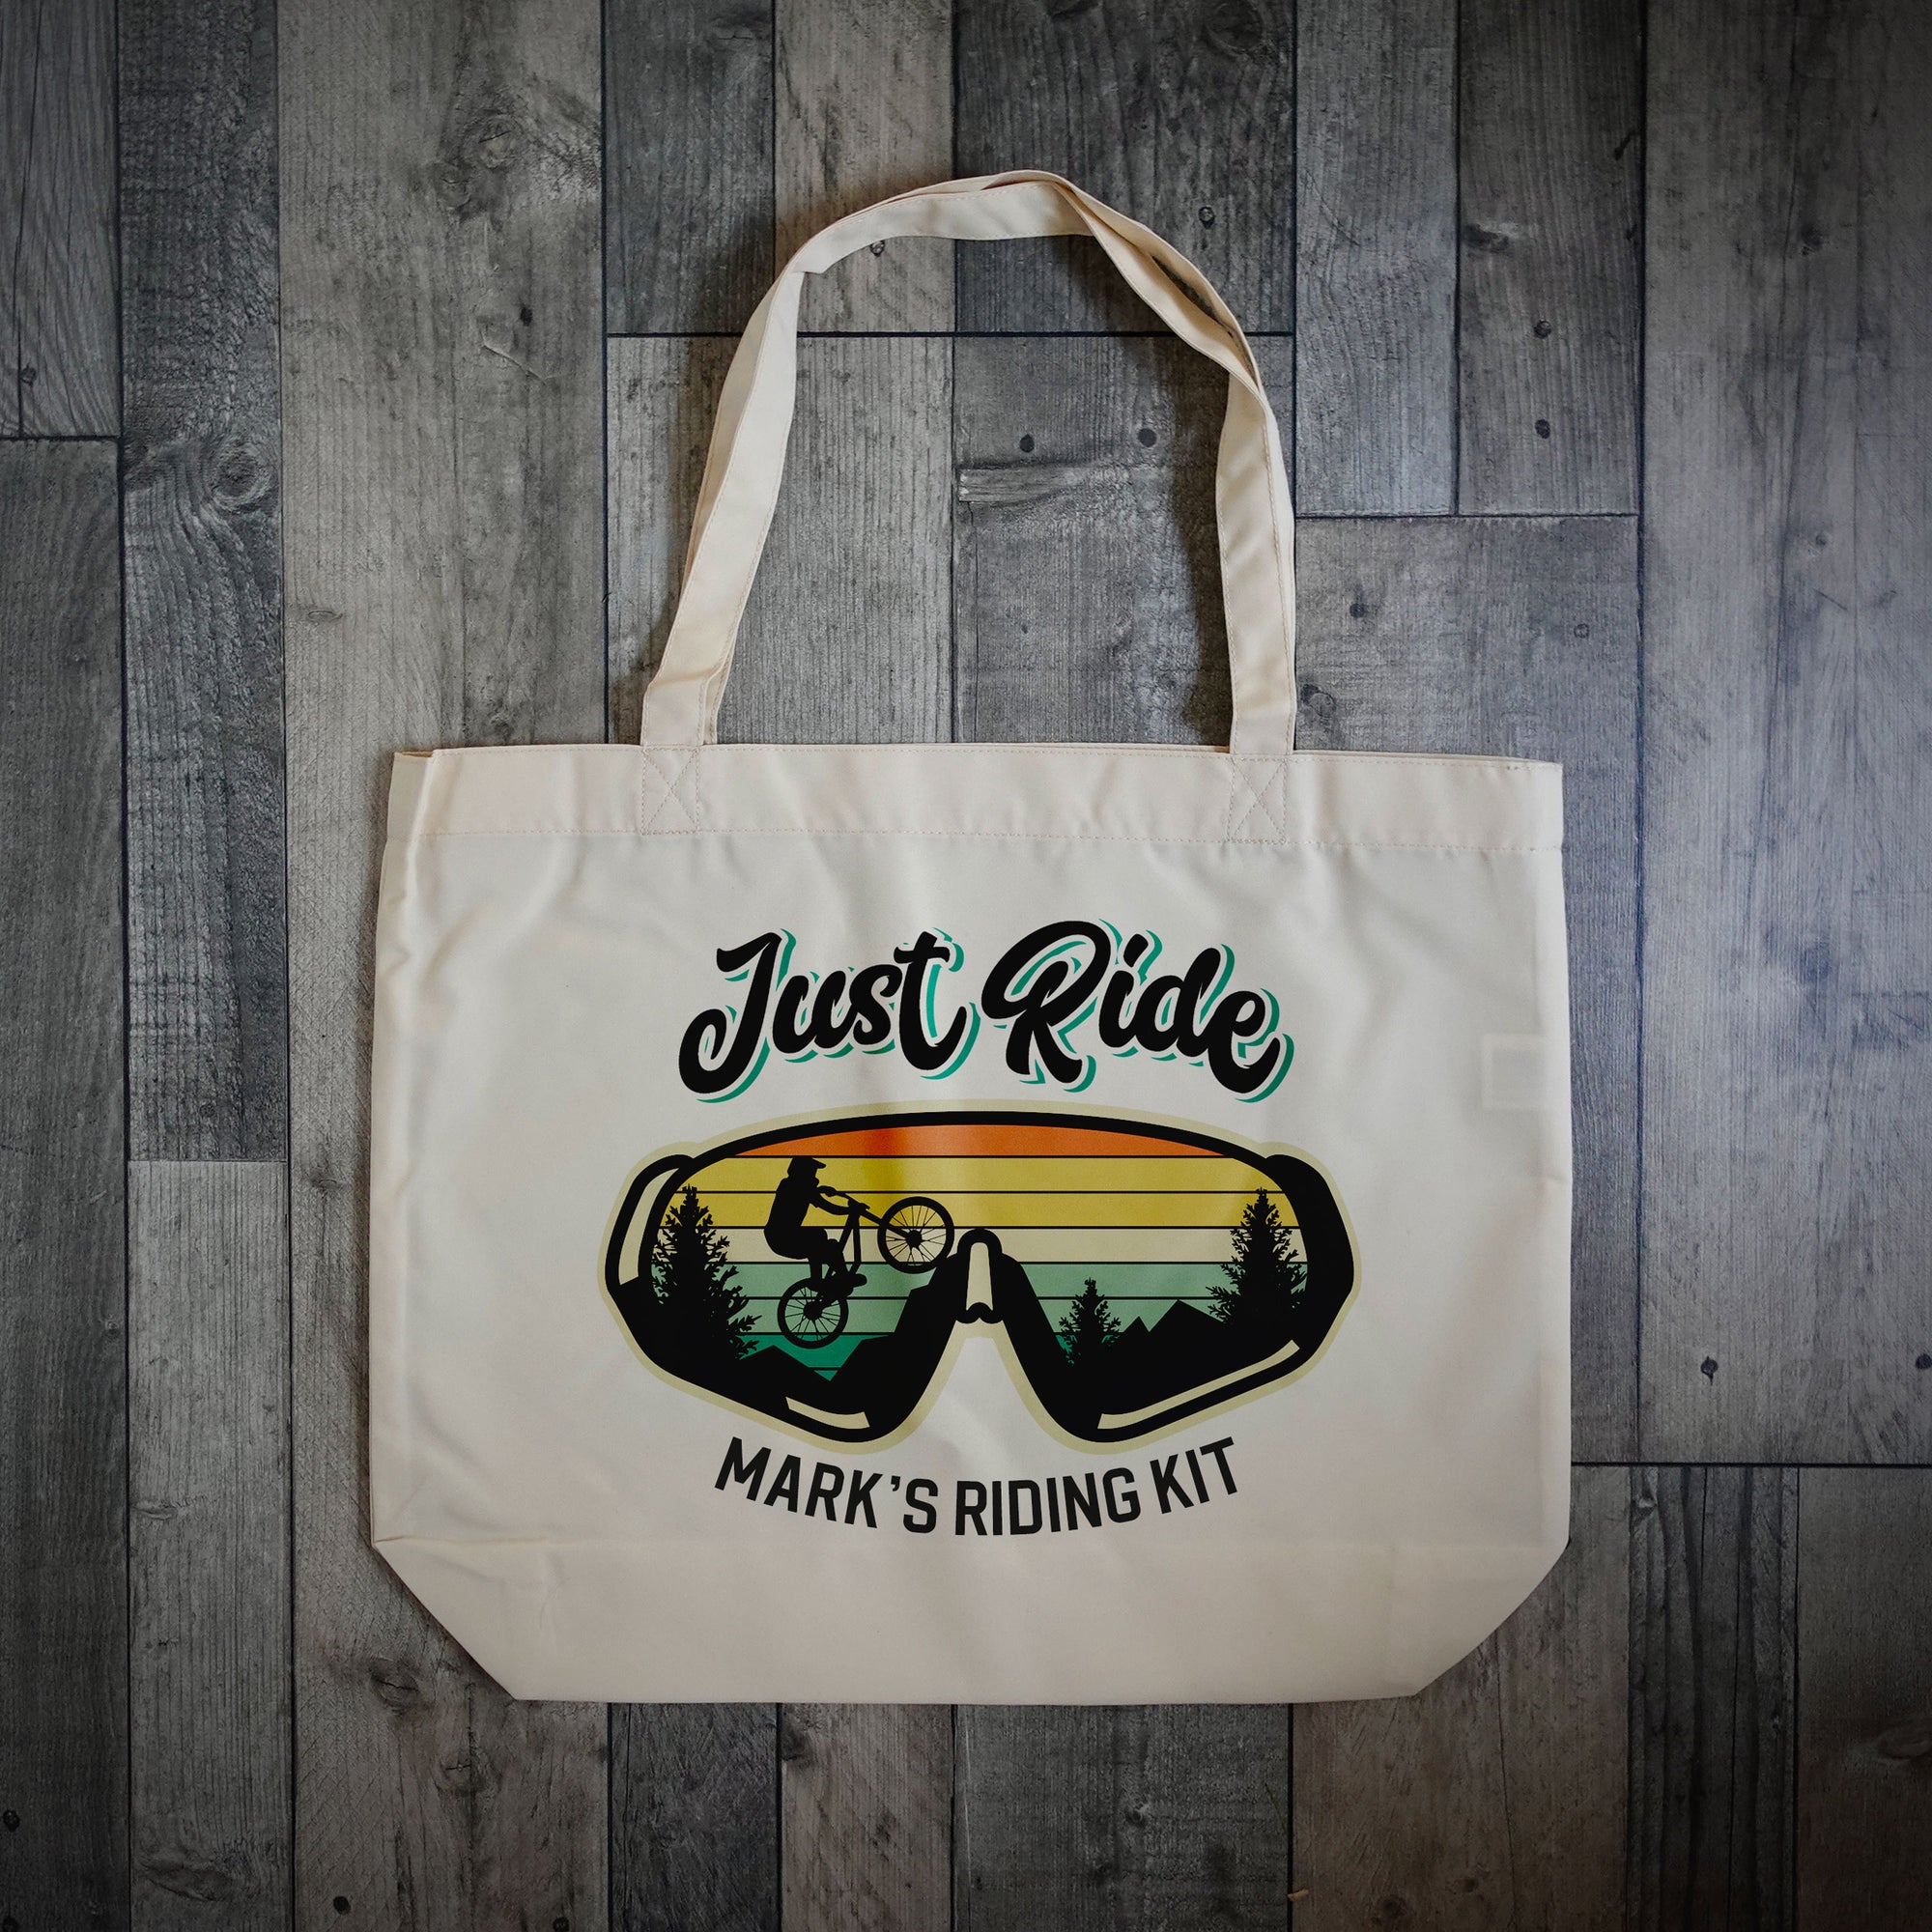 Just Ride Premium Cycling Kit Bag